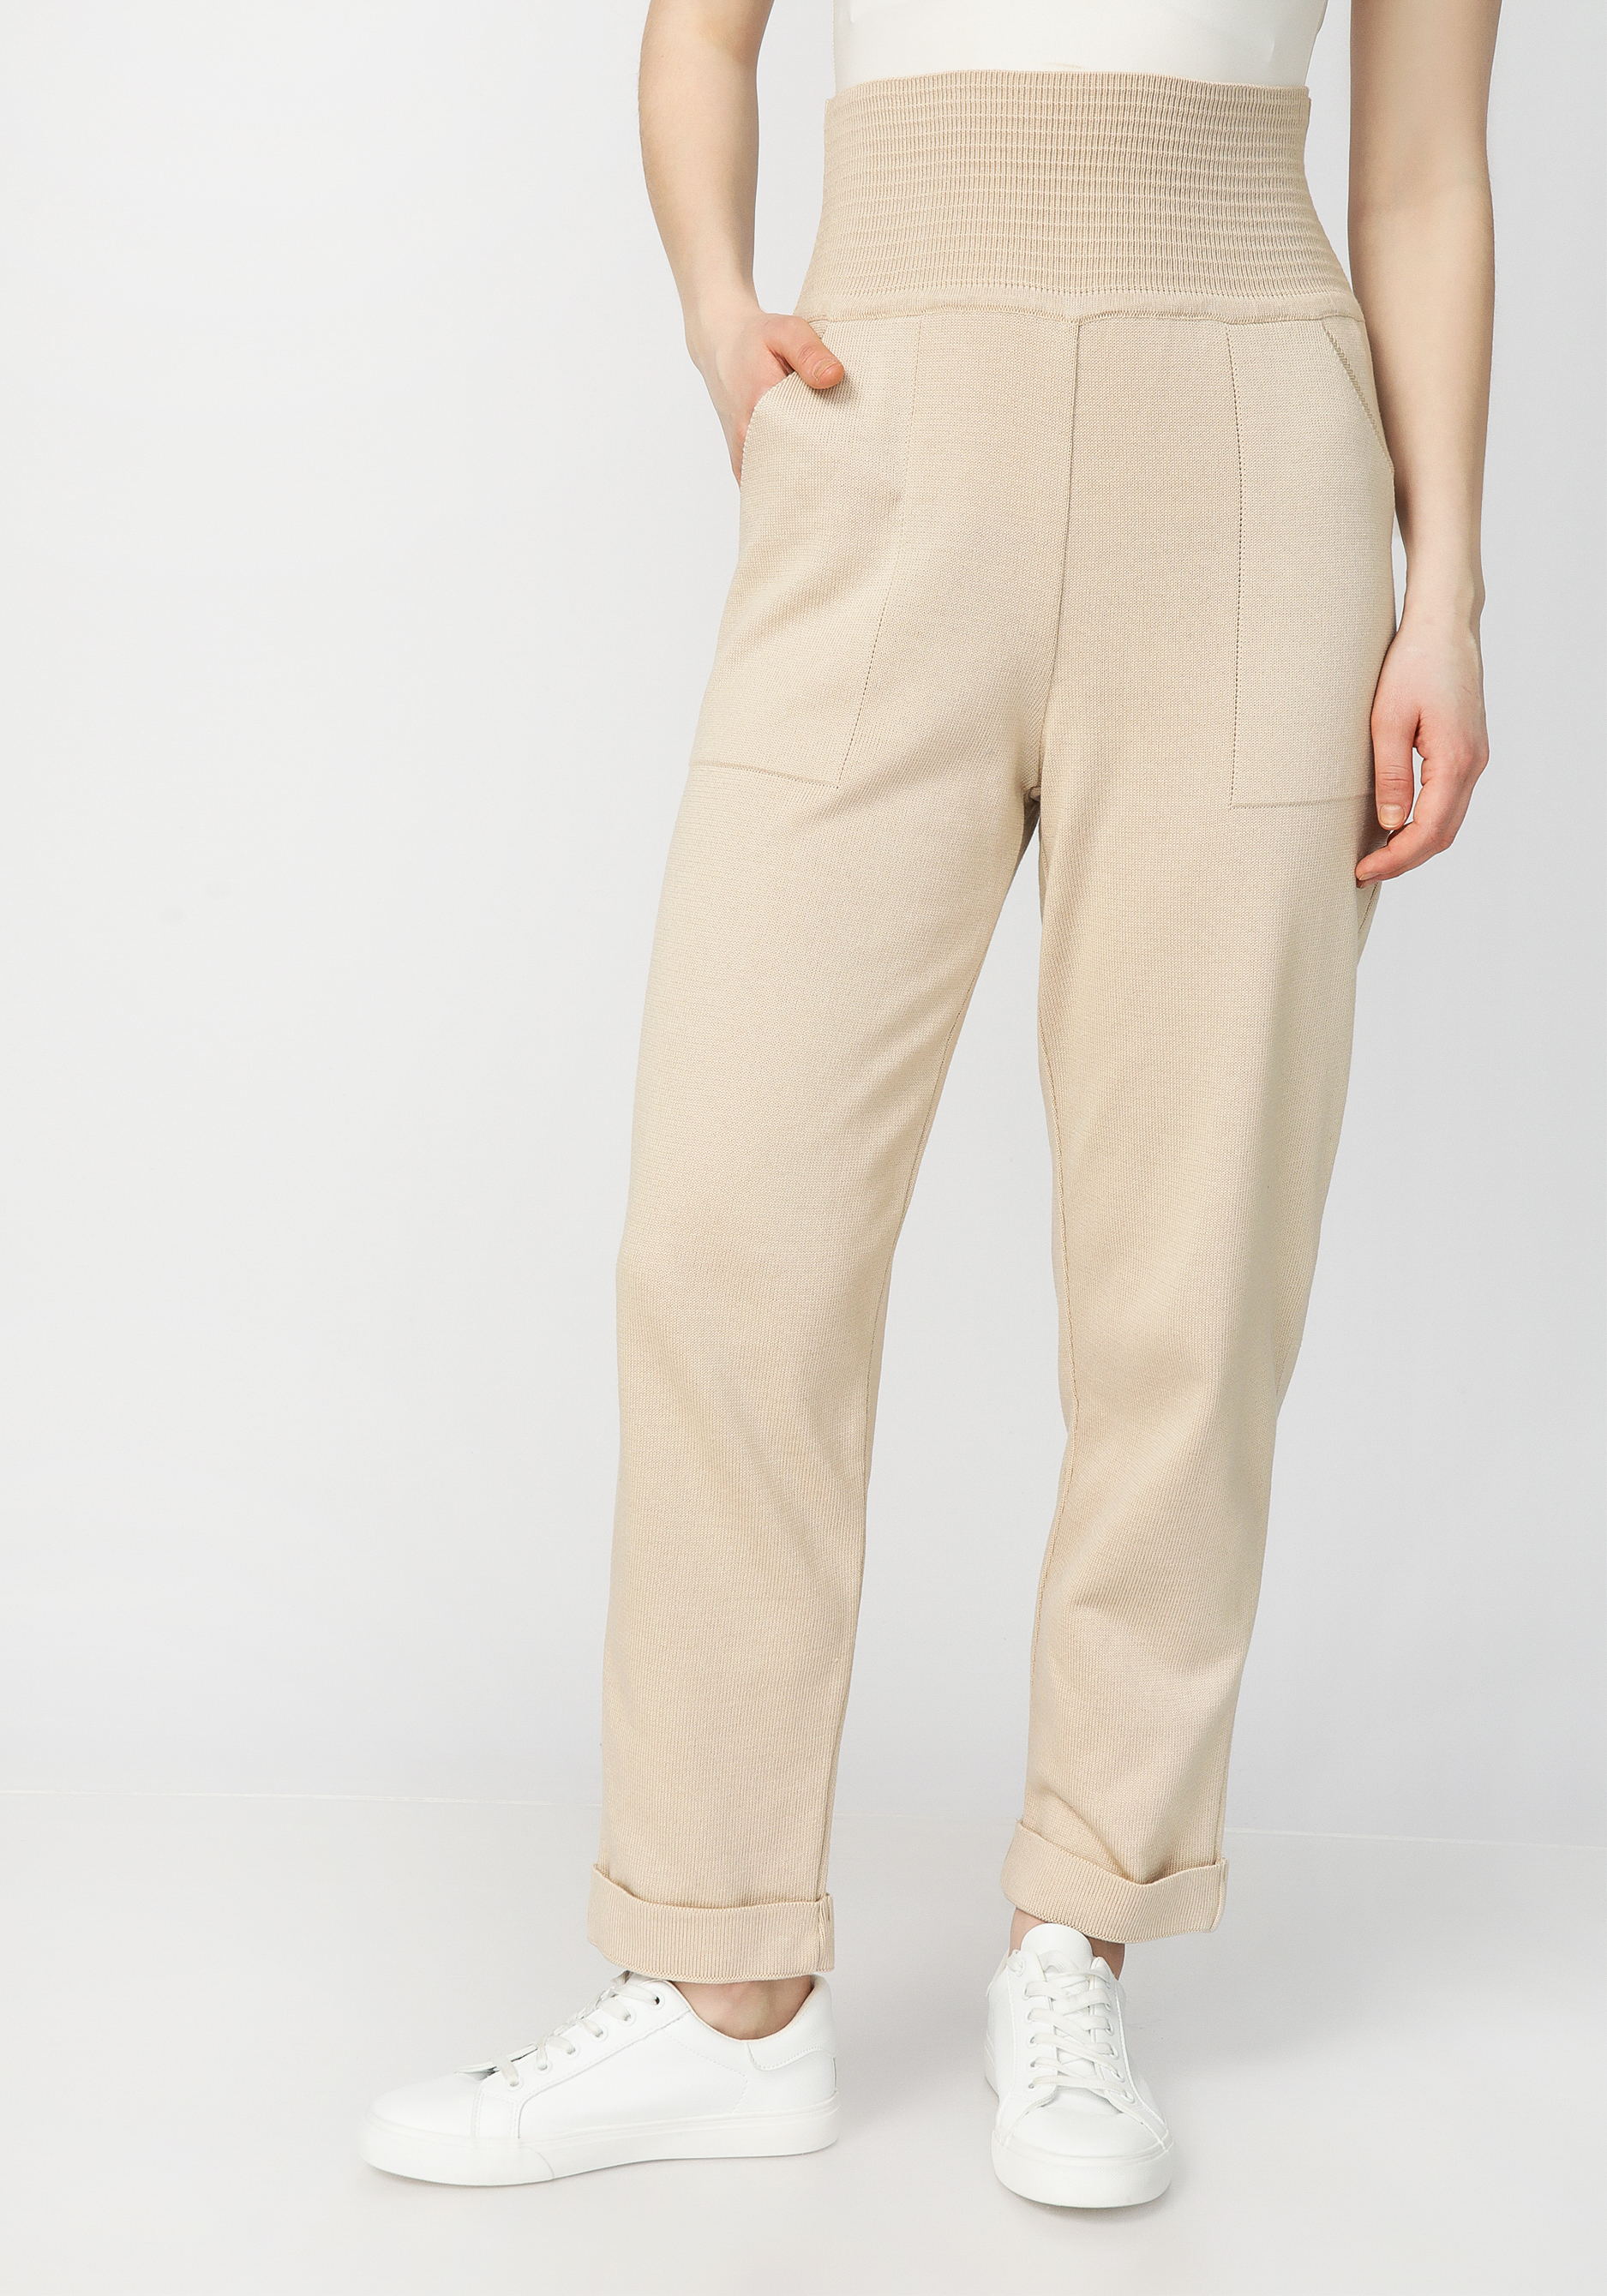 Брюки на широкой эластичной резинке пижама брюки